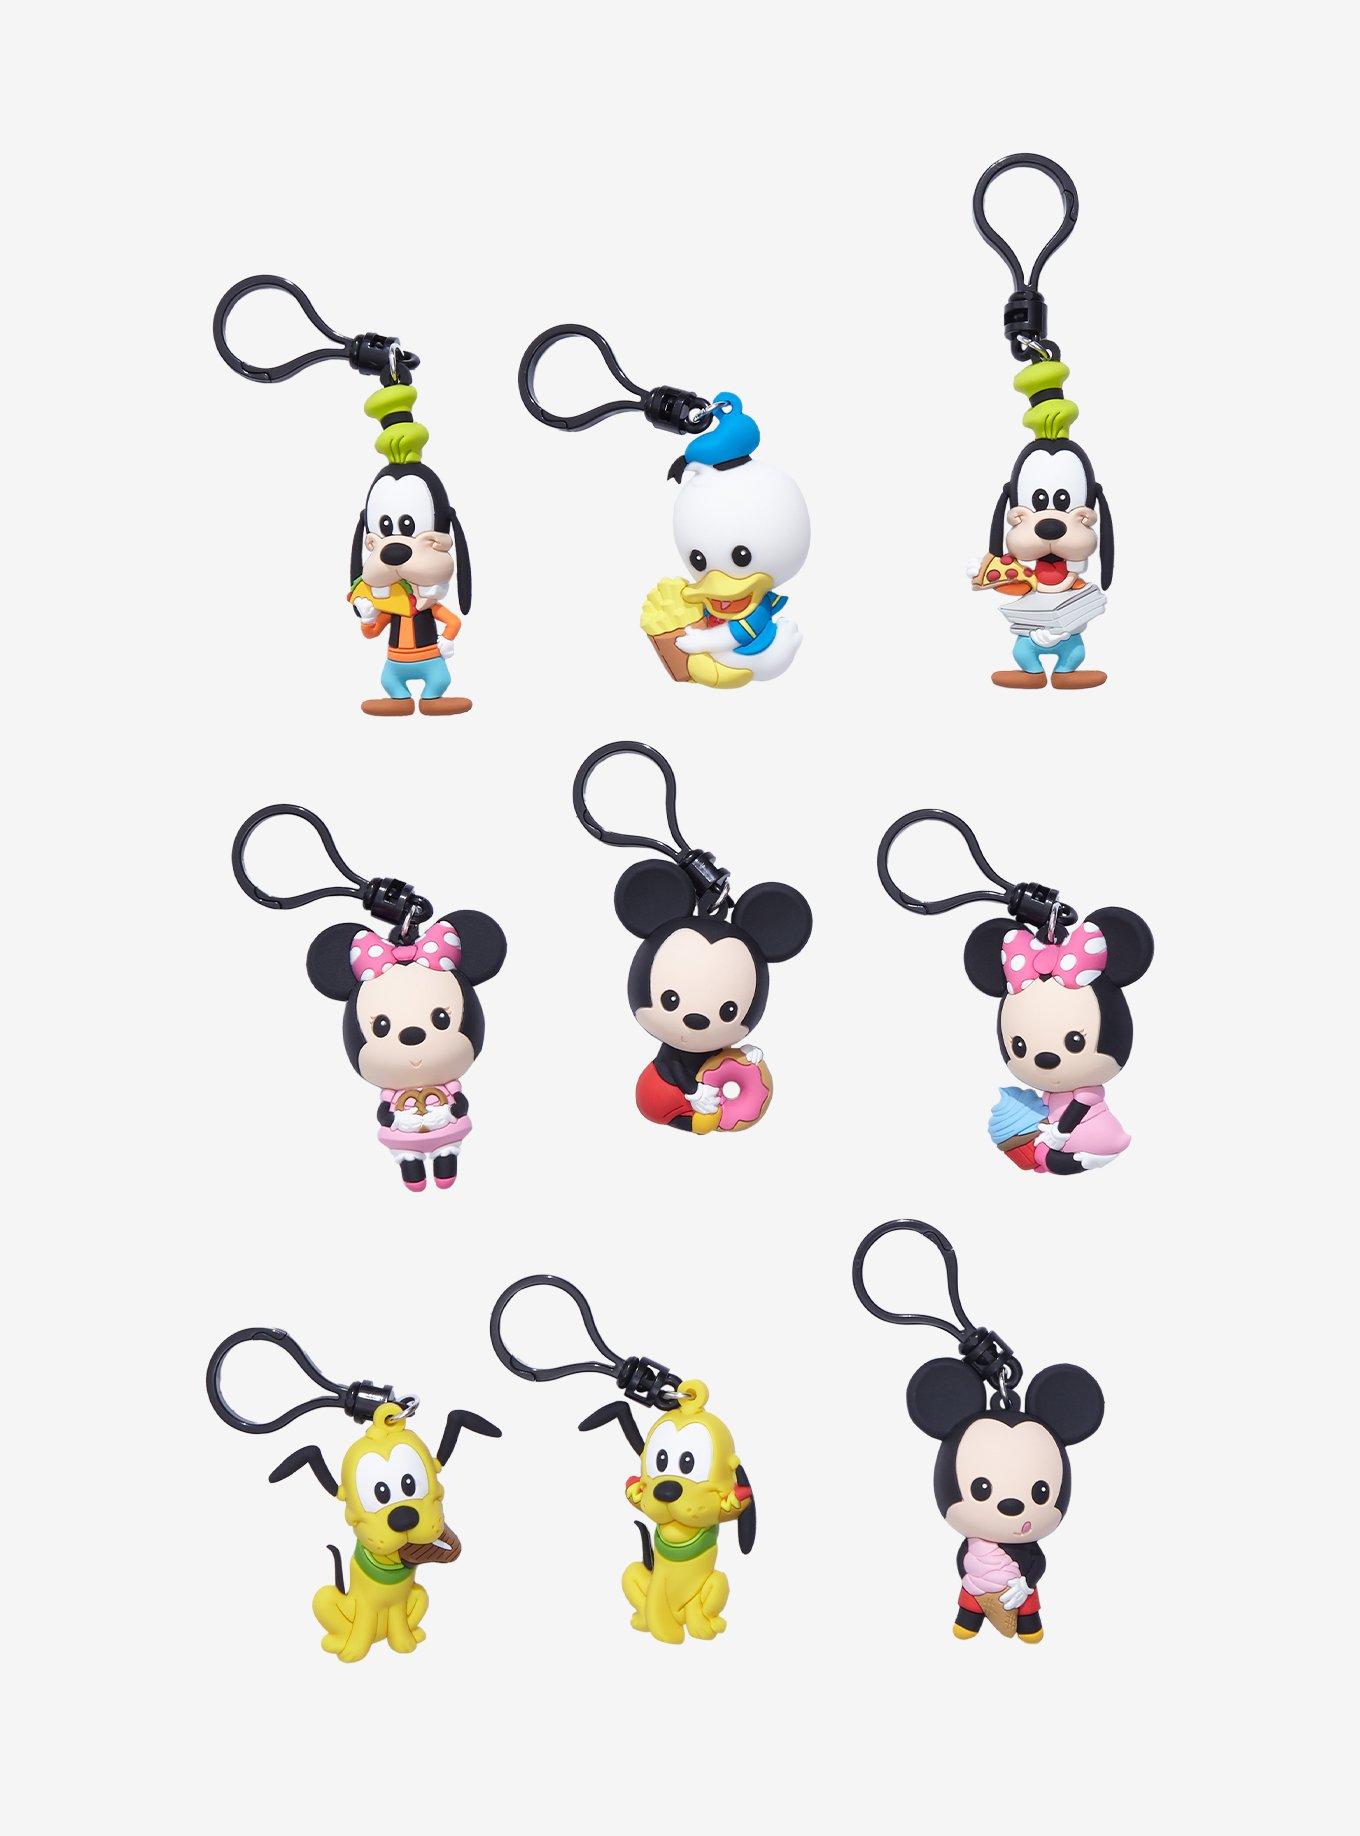 Disney Charm Keychain - Mickey Mouse - Metal